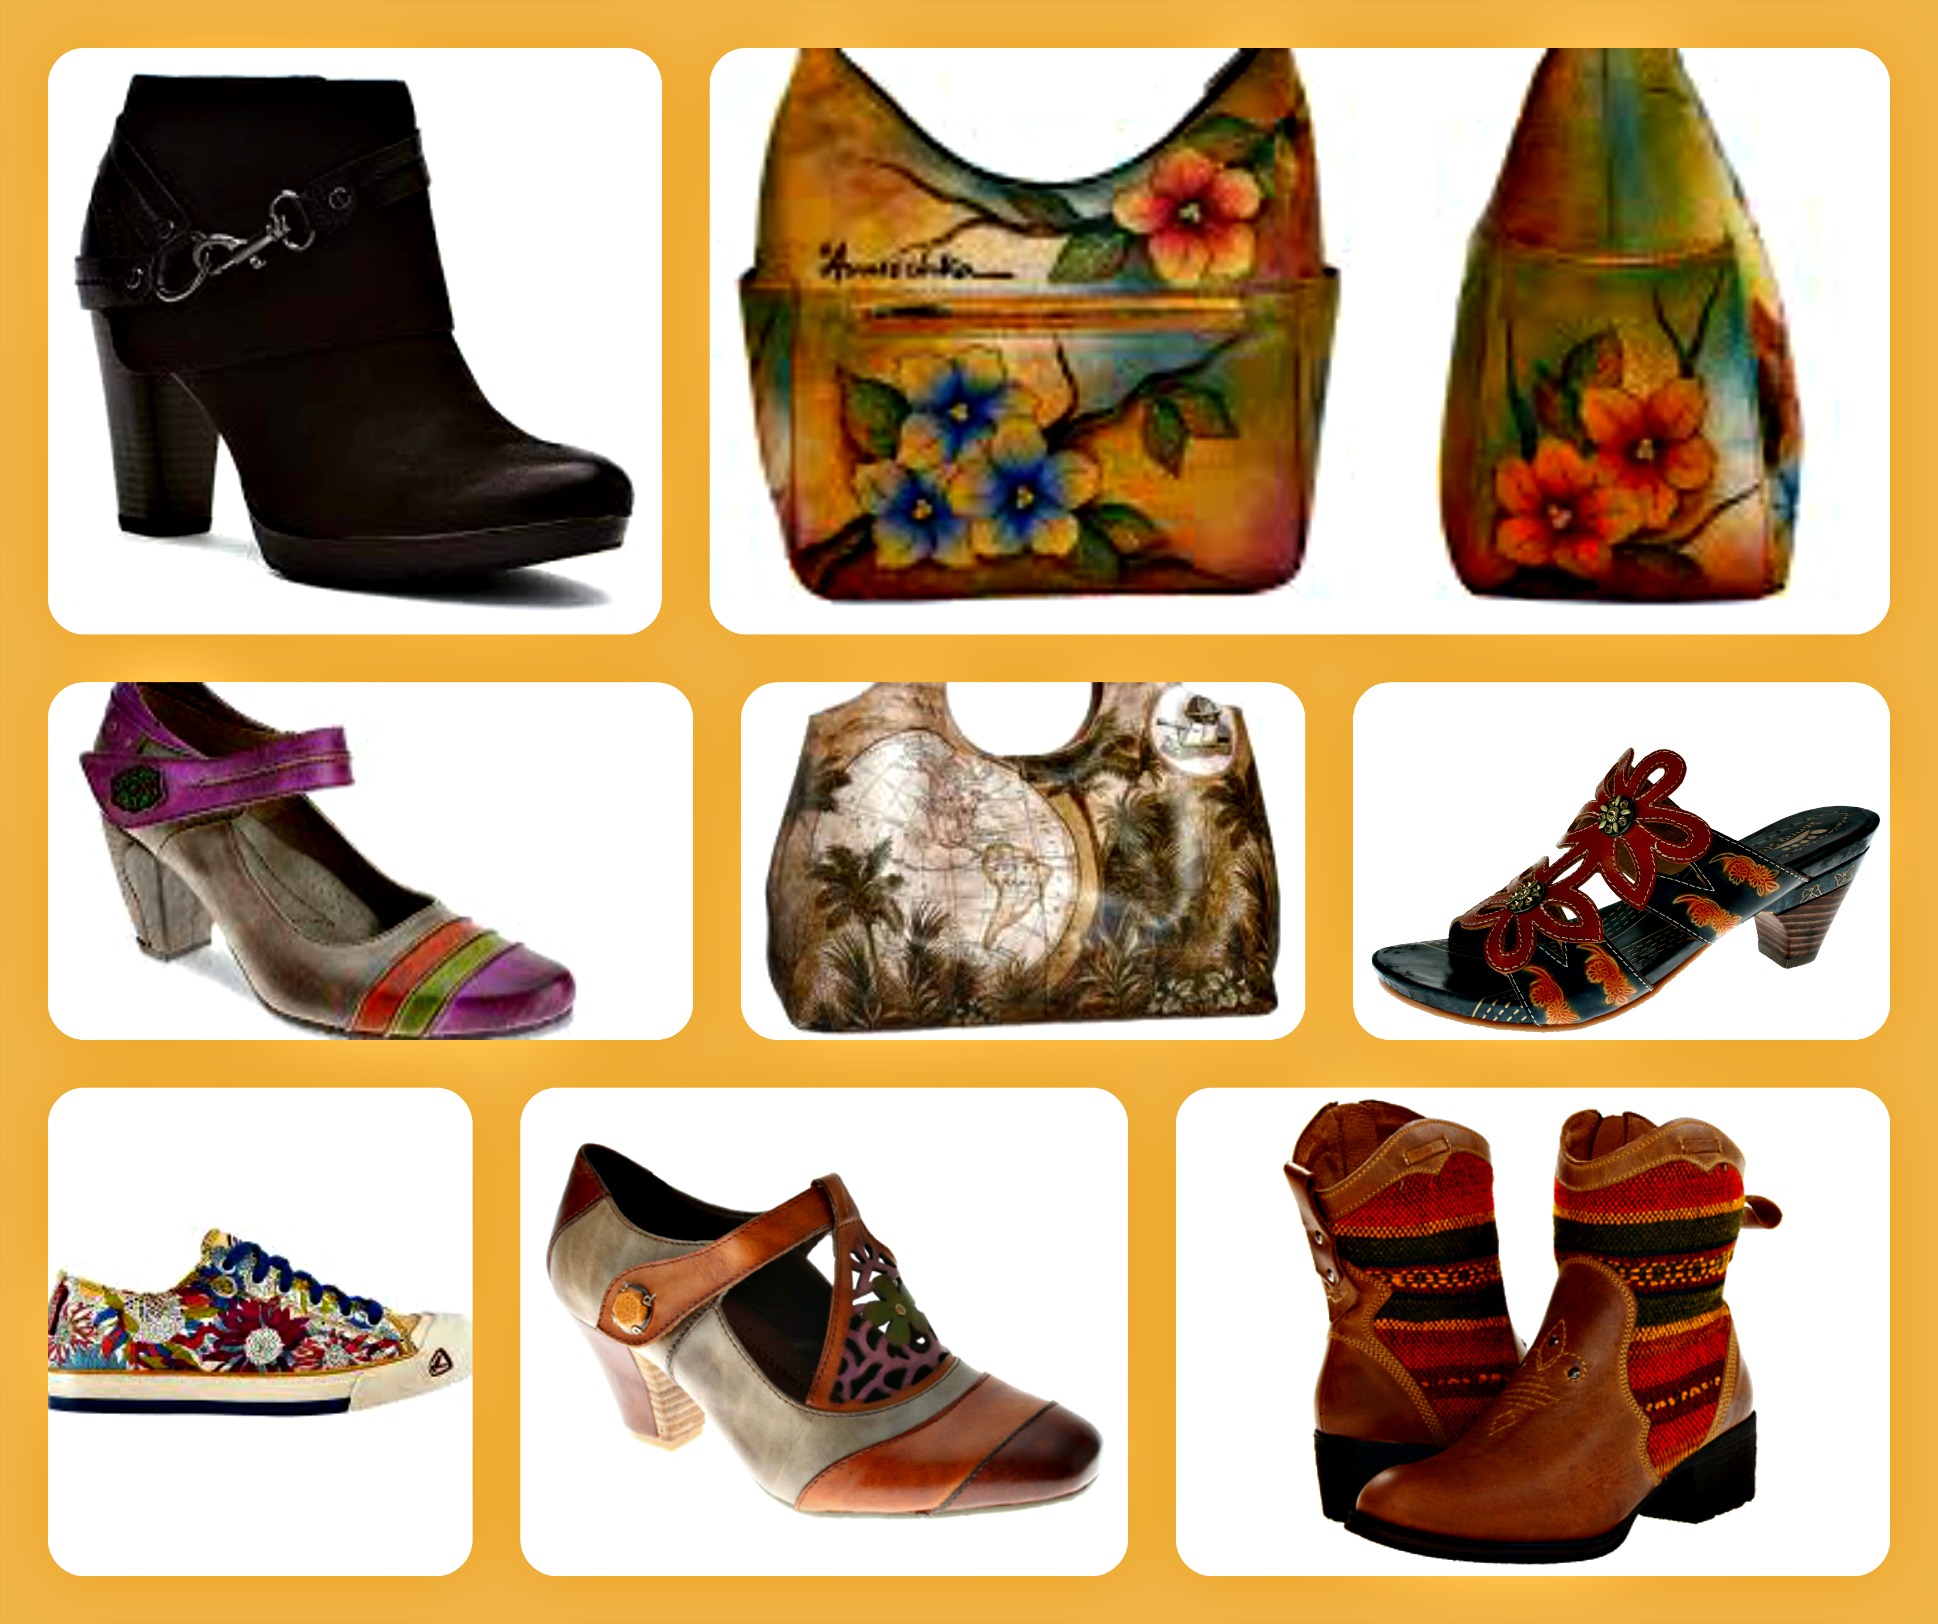 schuler shoes, leather boots, leather shoes, high quality shoes, anushka, born, pikolinus, clarks, sandals, handbag, purse, comfortable shoes